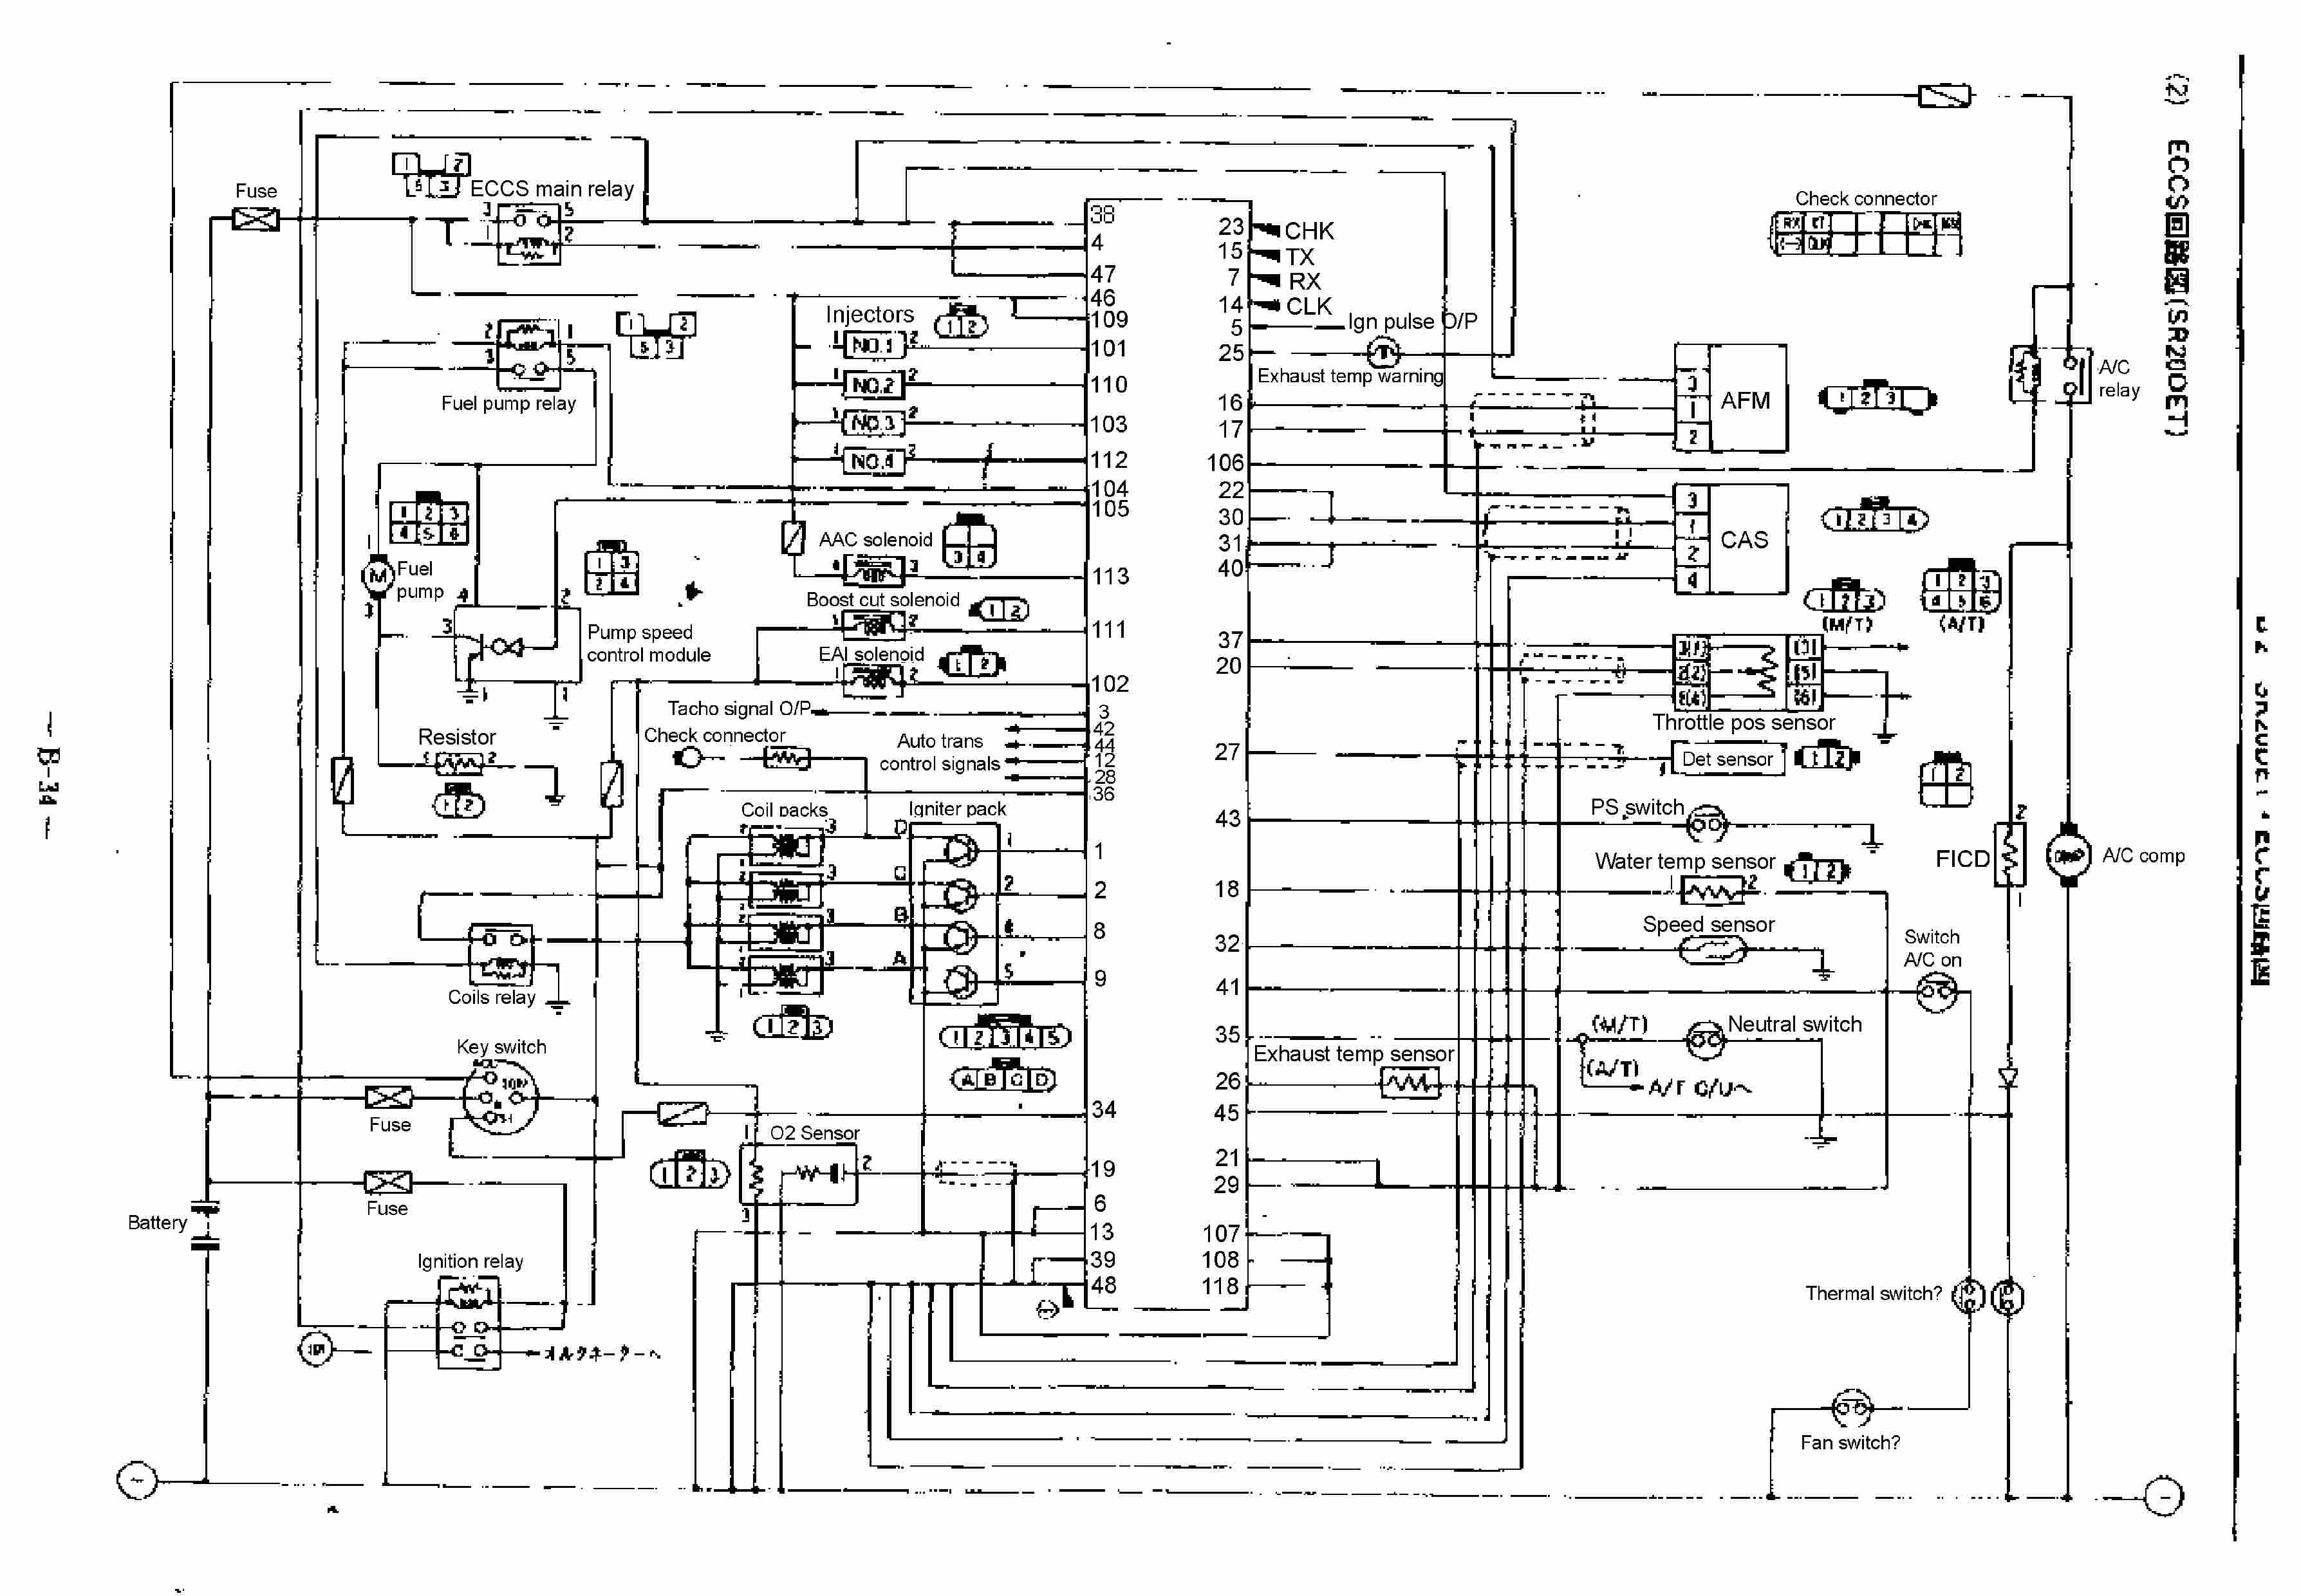 1995 Nissan Pickup Engine Diagram Electrical Wiring Diagrams Collision Body Repair Manual Nissan Note Of 1995 Nissan Pickup Engine Diagram